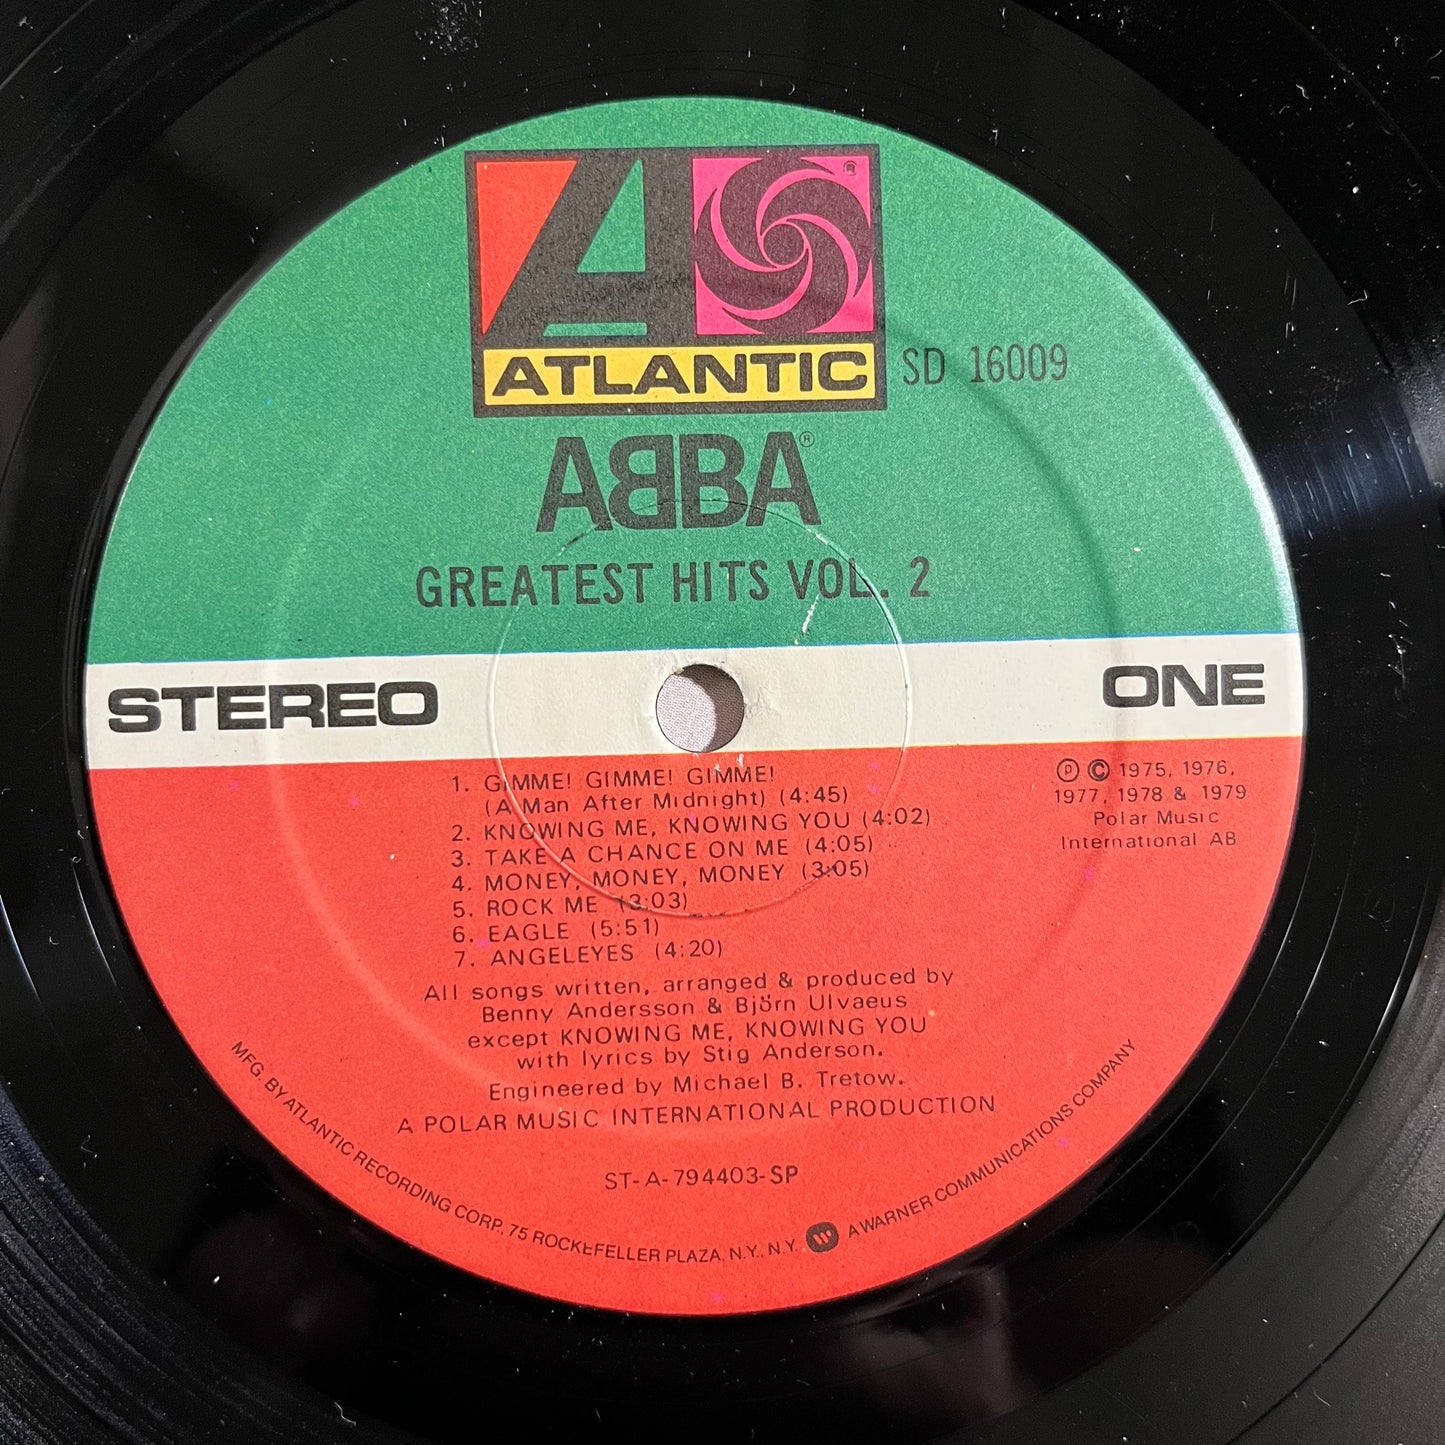 ABBA Greatest Hits Vol. 2 LP Near Mint (NM or M-) Near Mint (NM or M-)